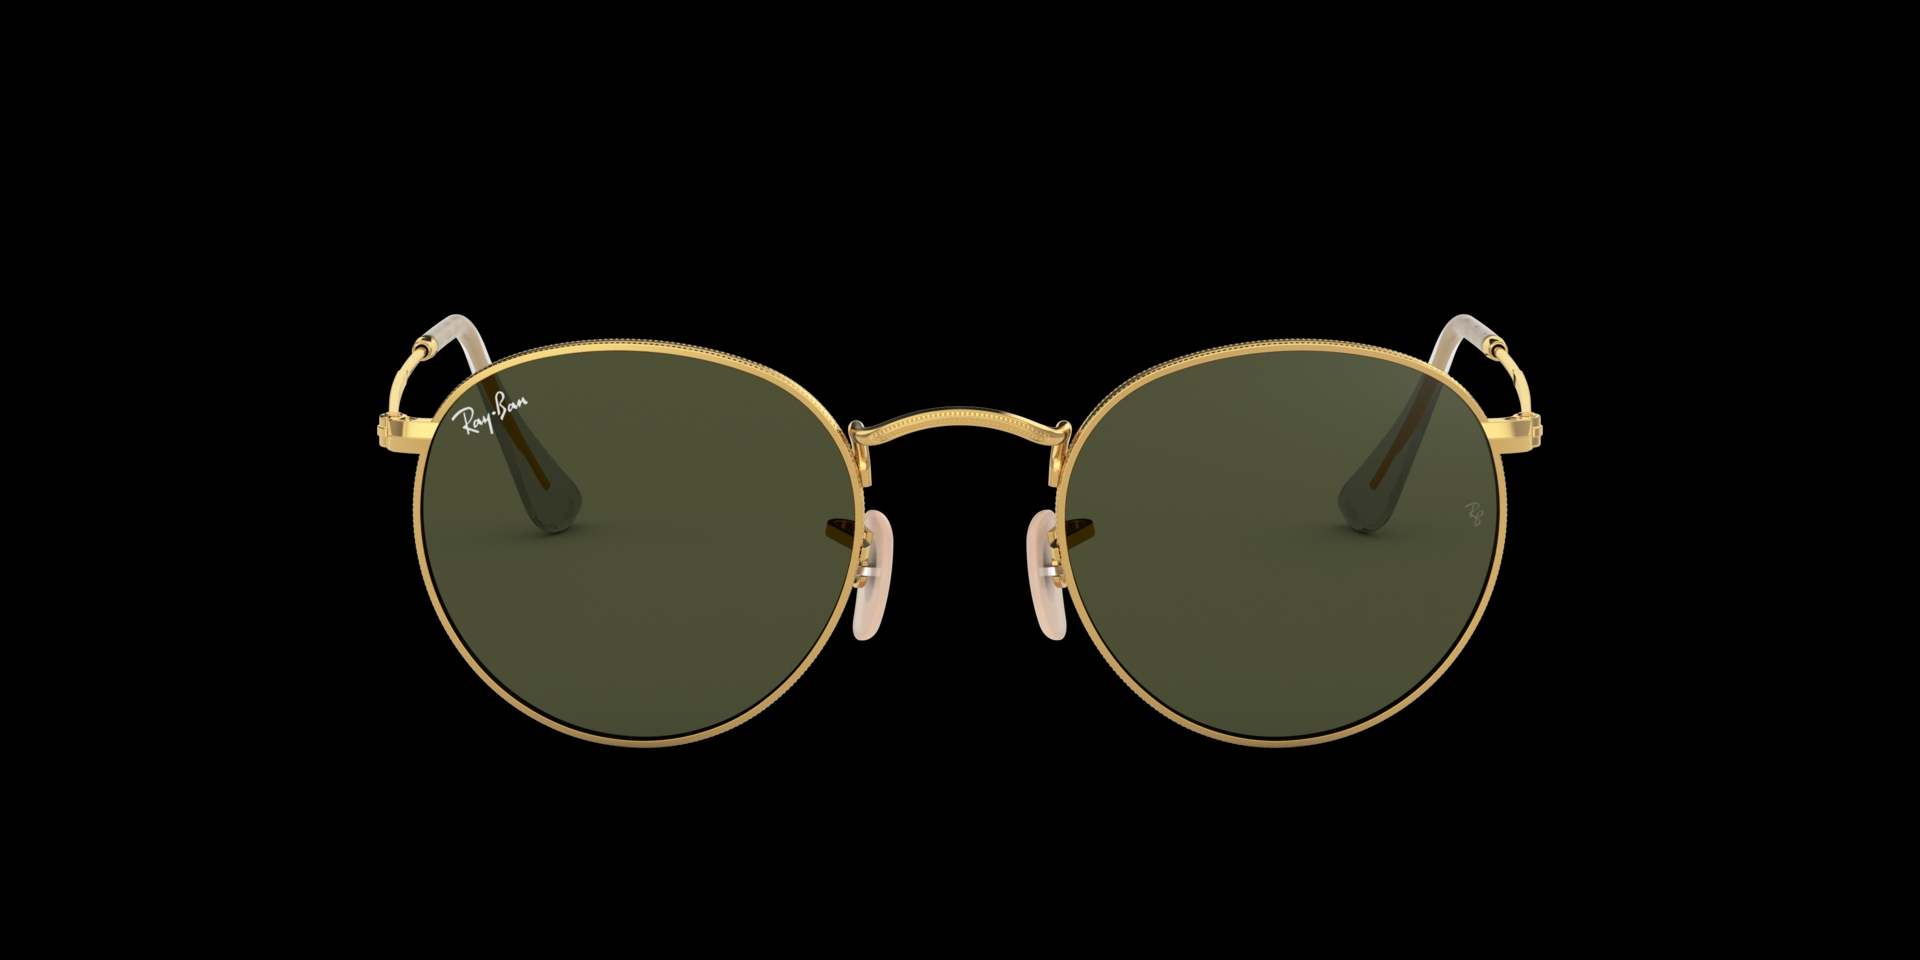 Ray-Ban Classic Aviator Sunglasses, Gold/Green | Ray bans, Rayban sunglasses  aviators, Style